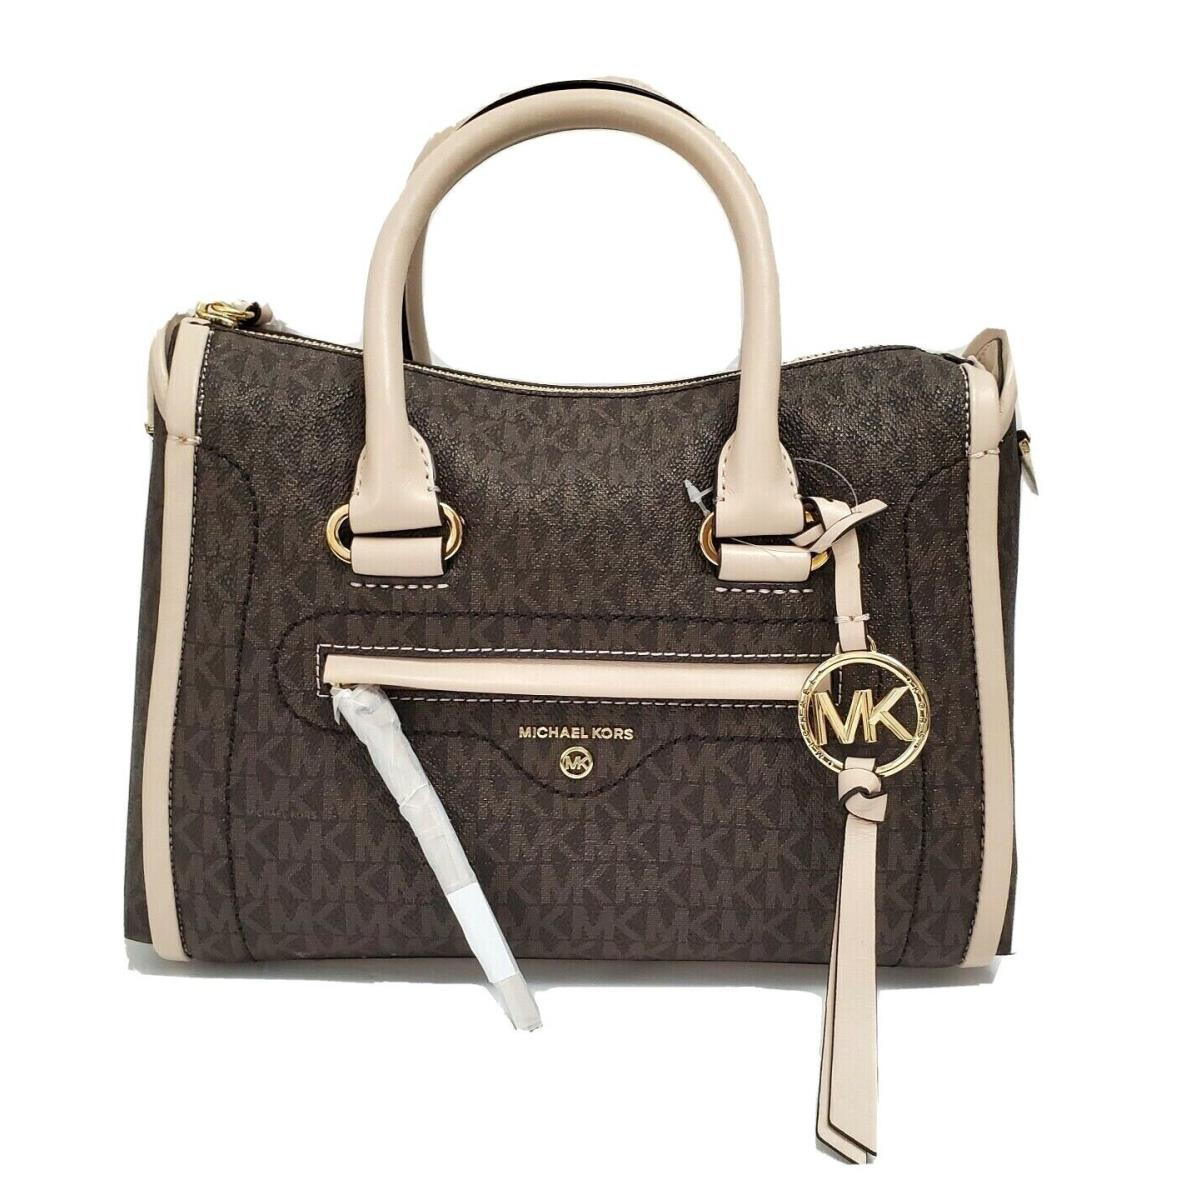 Women`s Michael Kors Carine Small Brown/soft/pink Satchel Handbag - Pink Handle/Strap, Pink Hardware, Brown Exterior